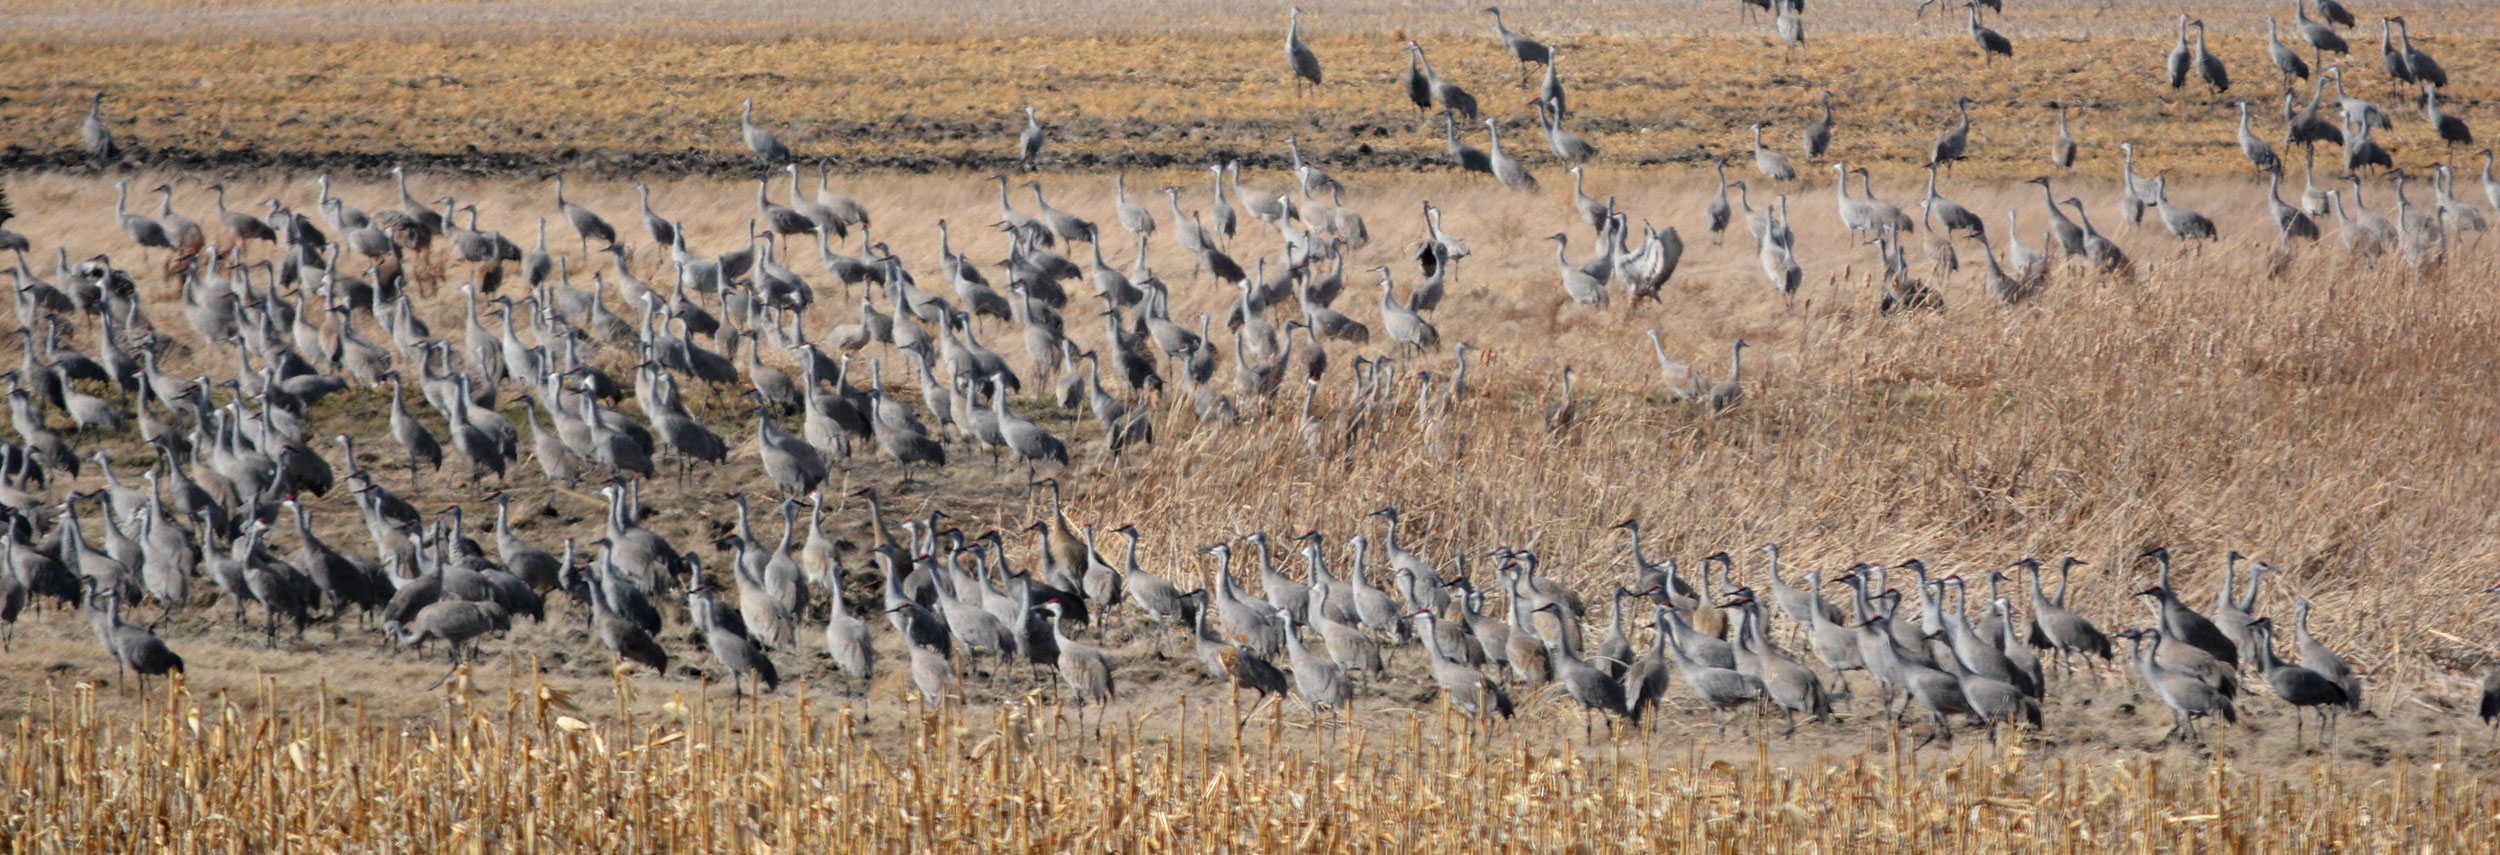 Sandhill cranes in a harvested crop field